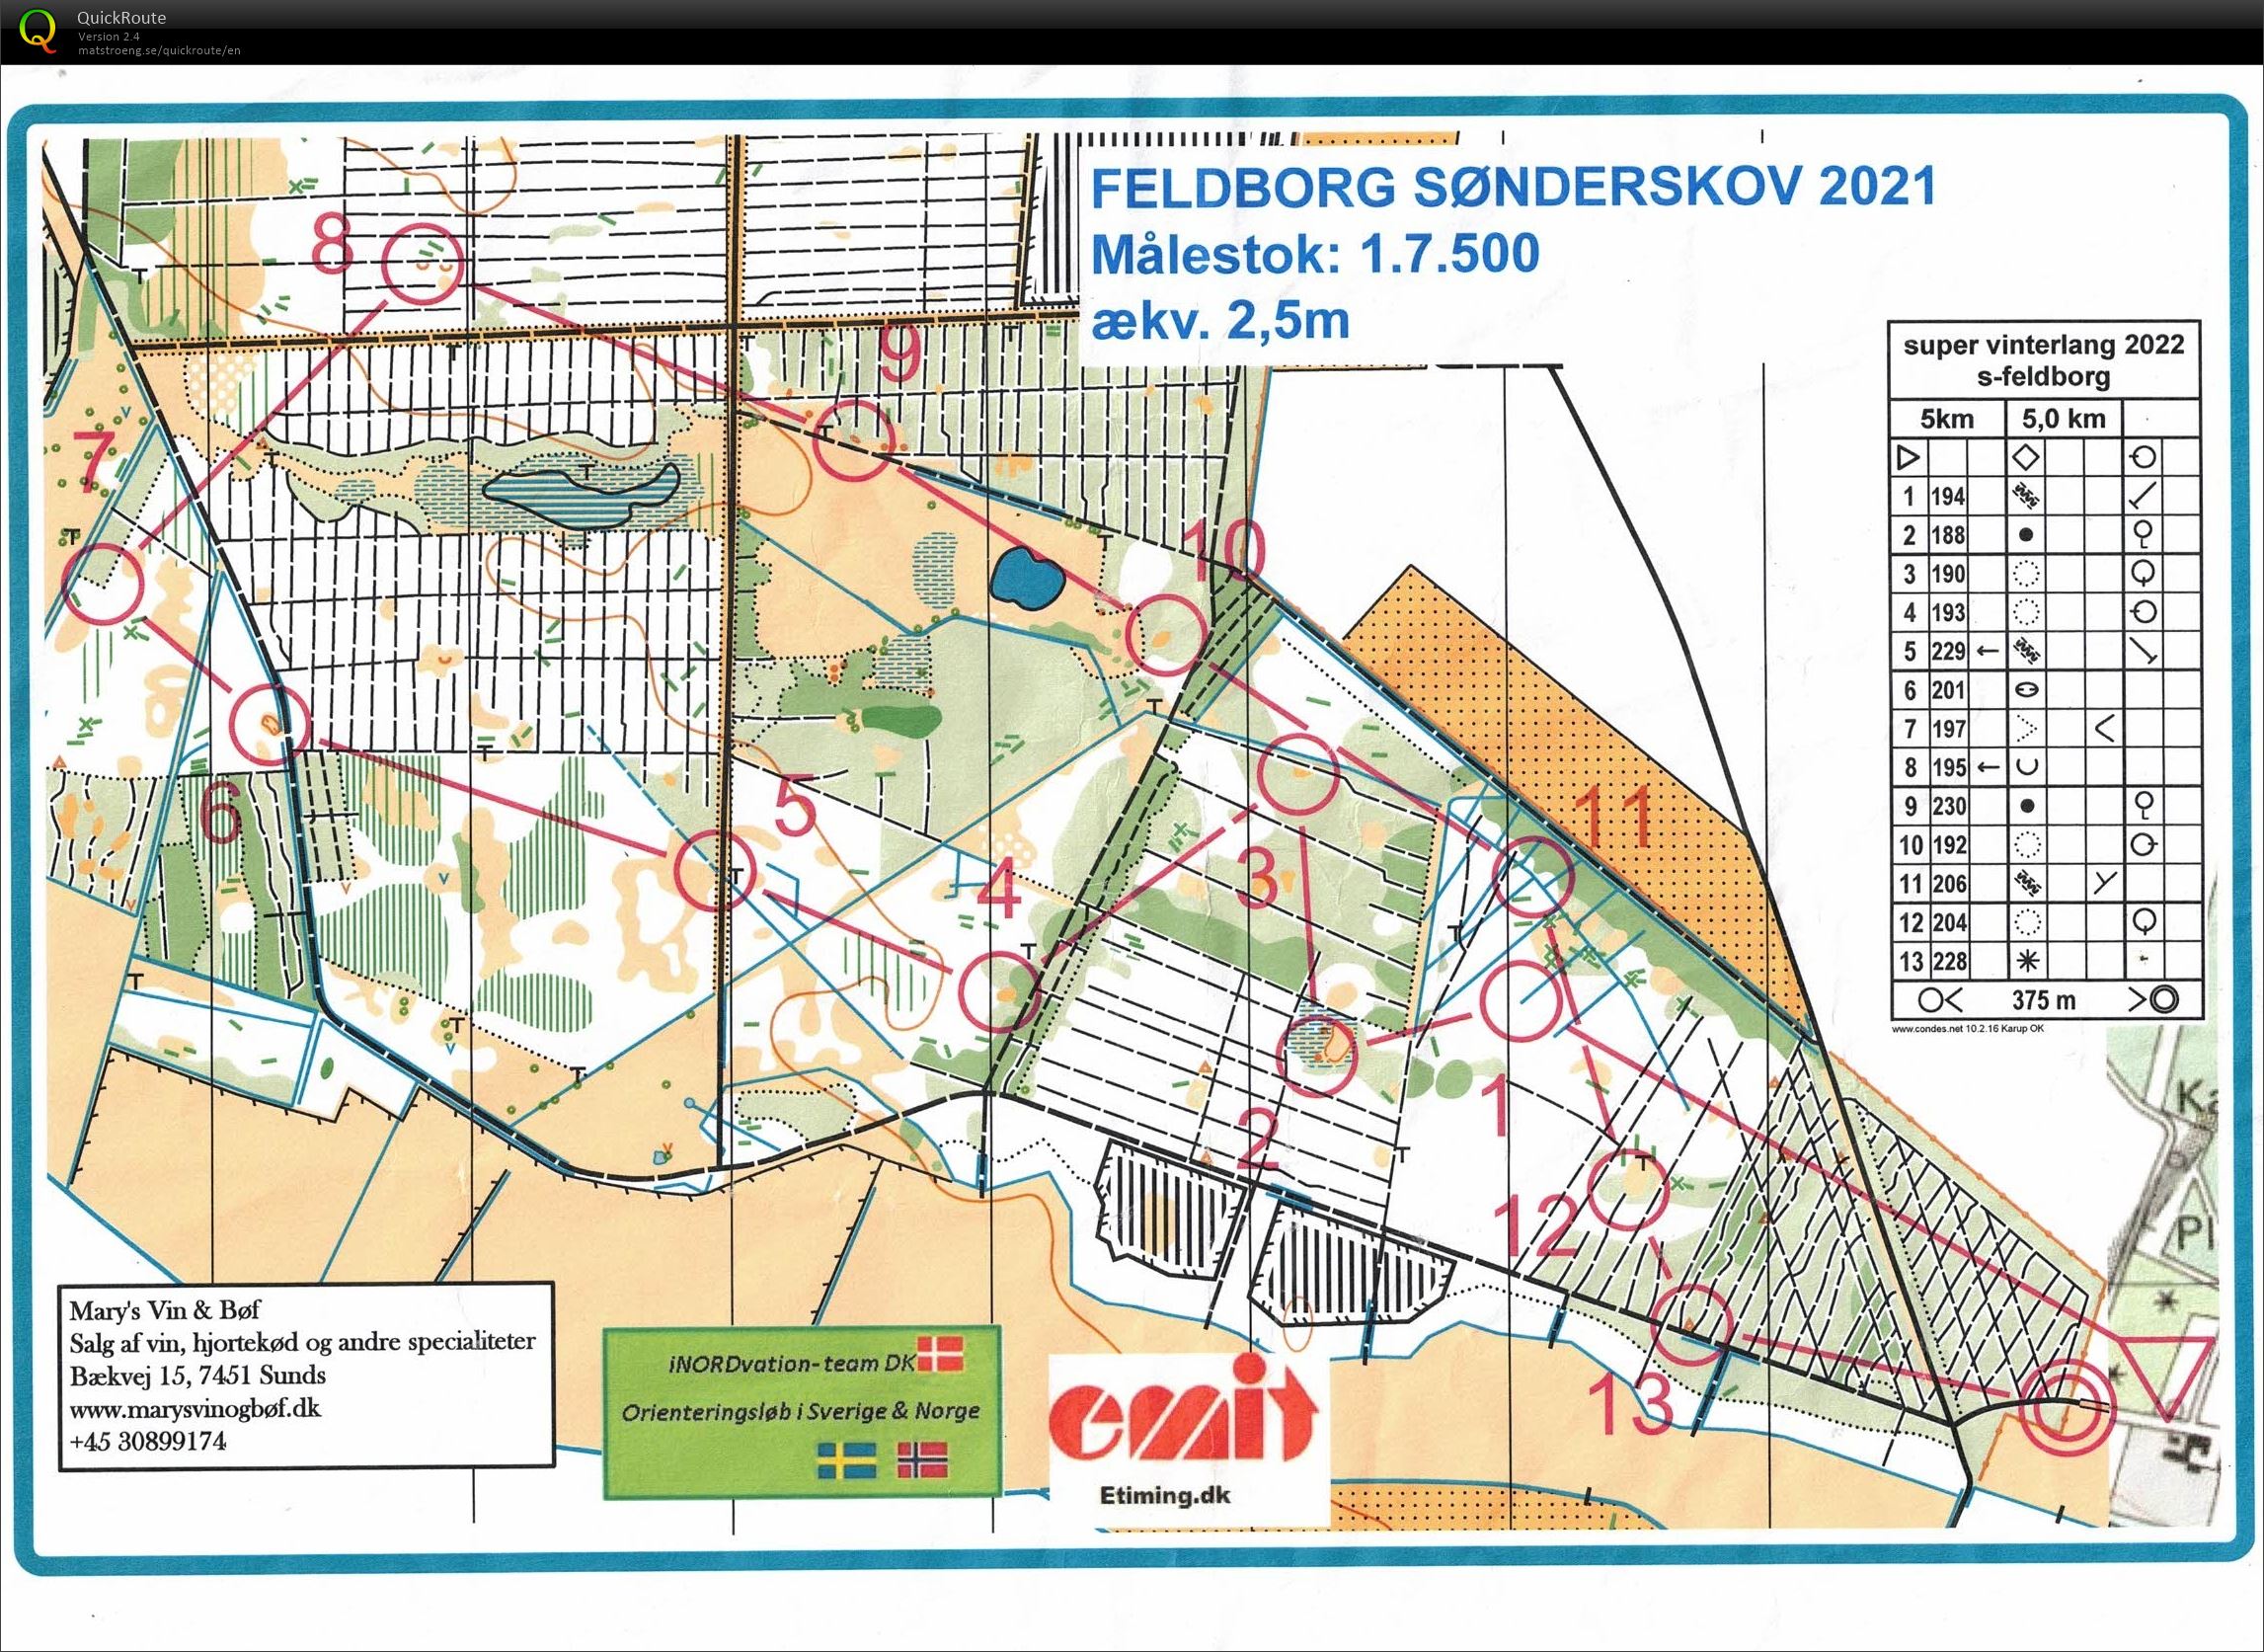 Feldborg Sønderskov, Super Langdistance 2, Bane 5 km, Pia Gade, 020122 (02.01.2022)